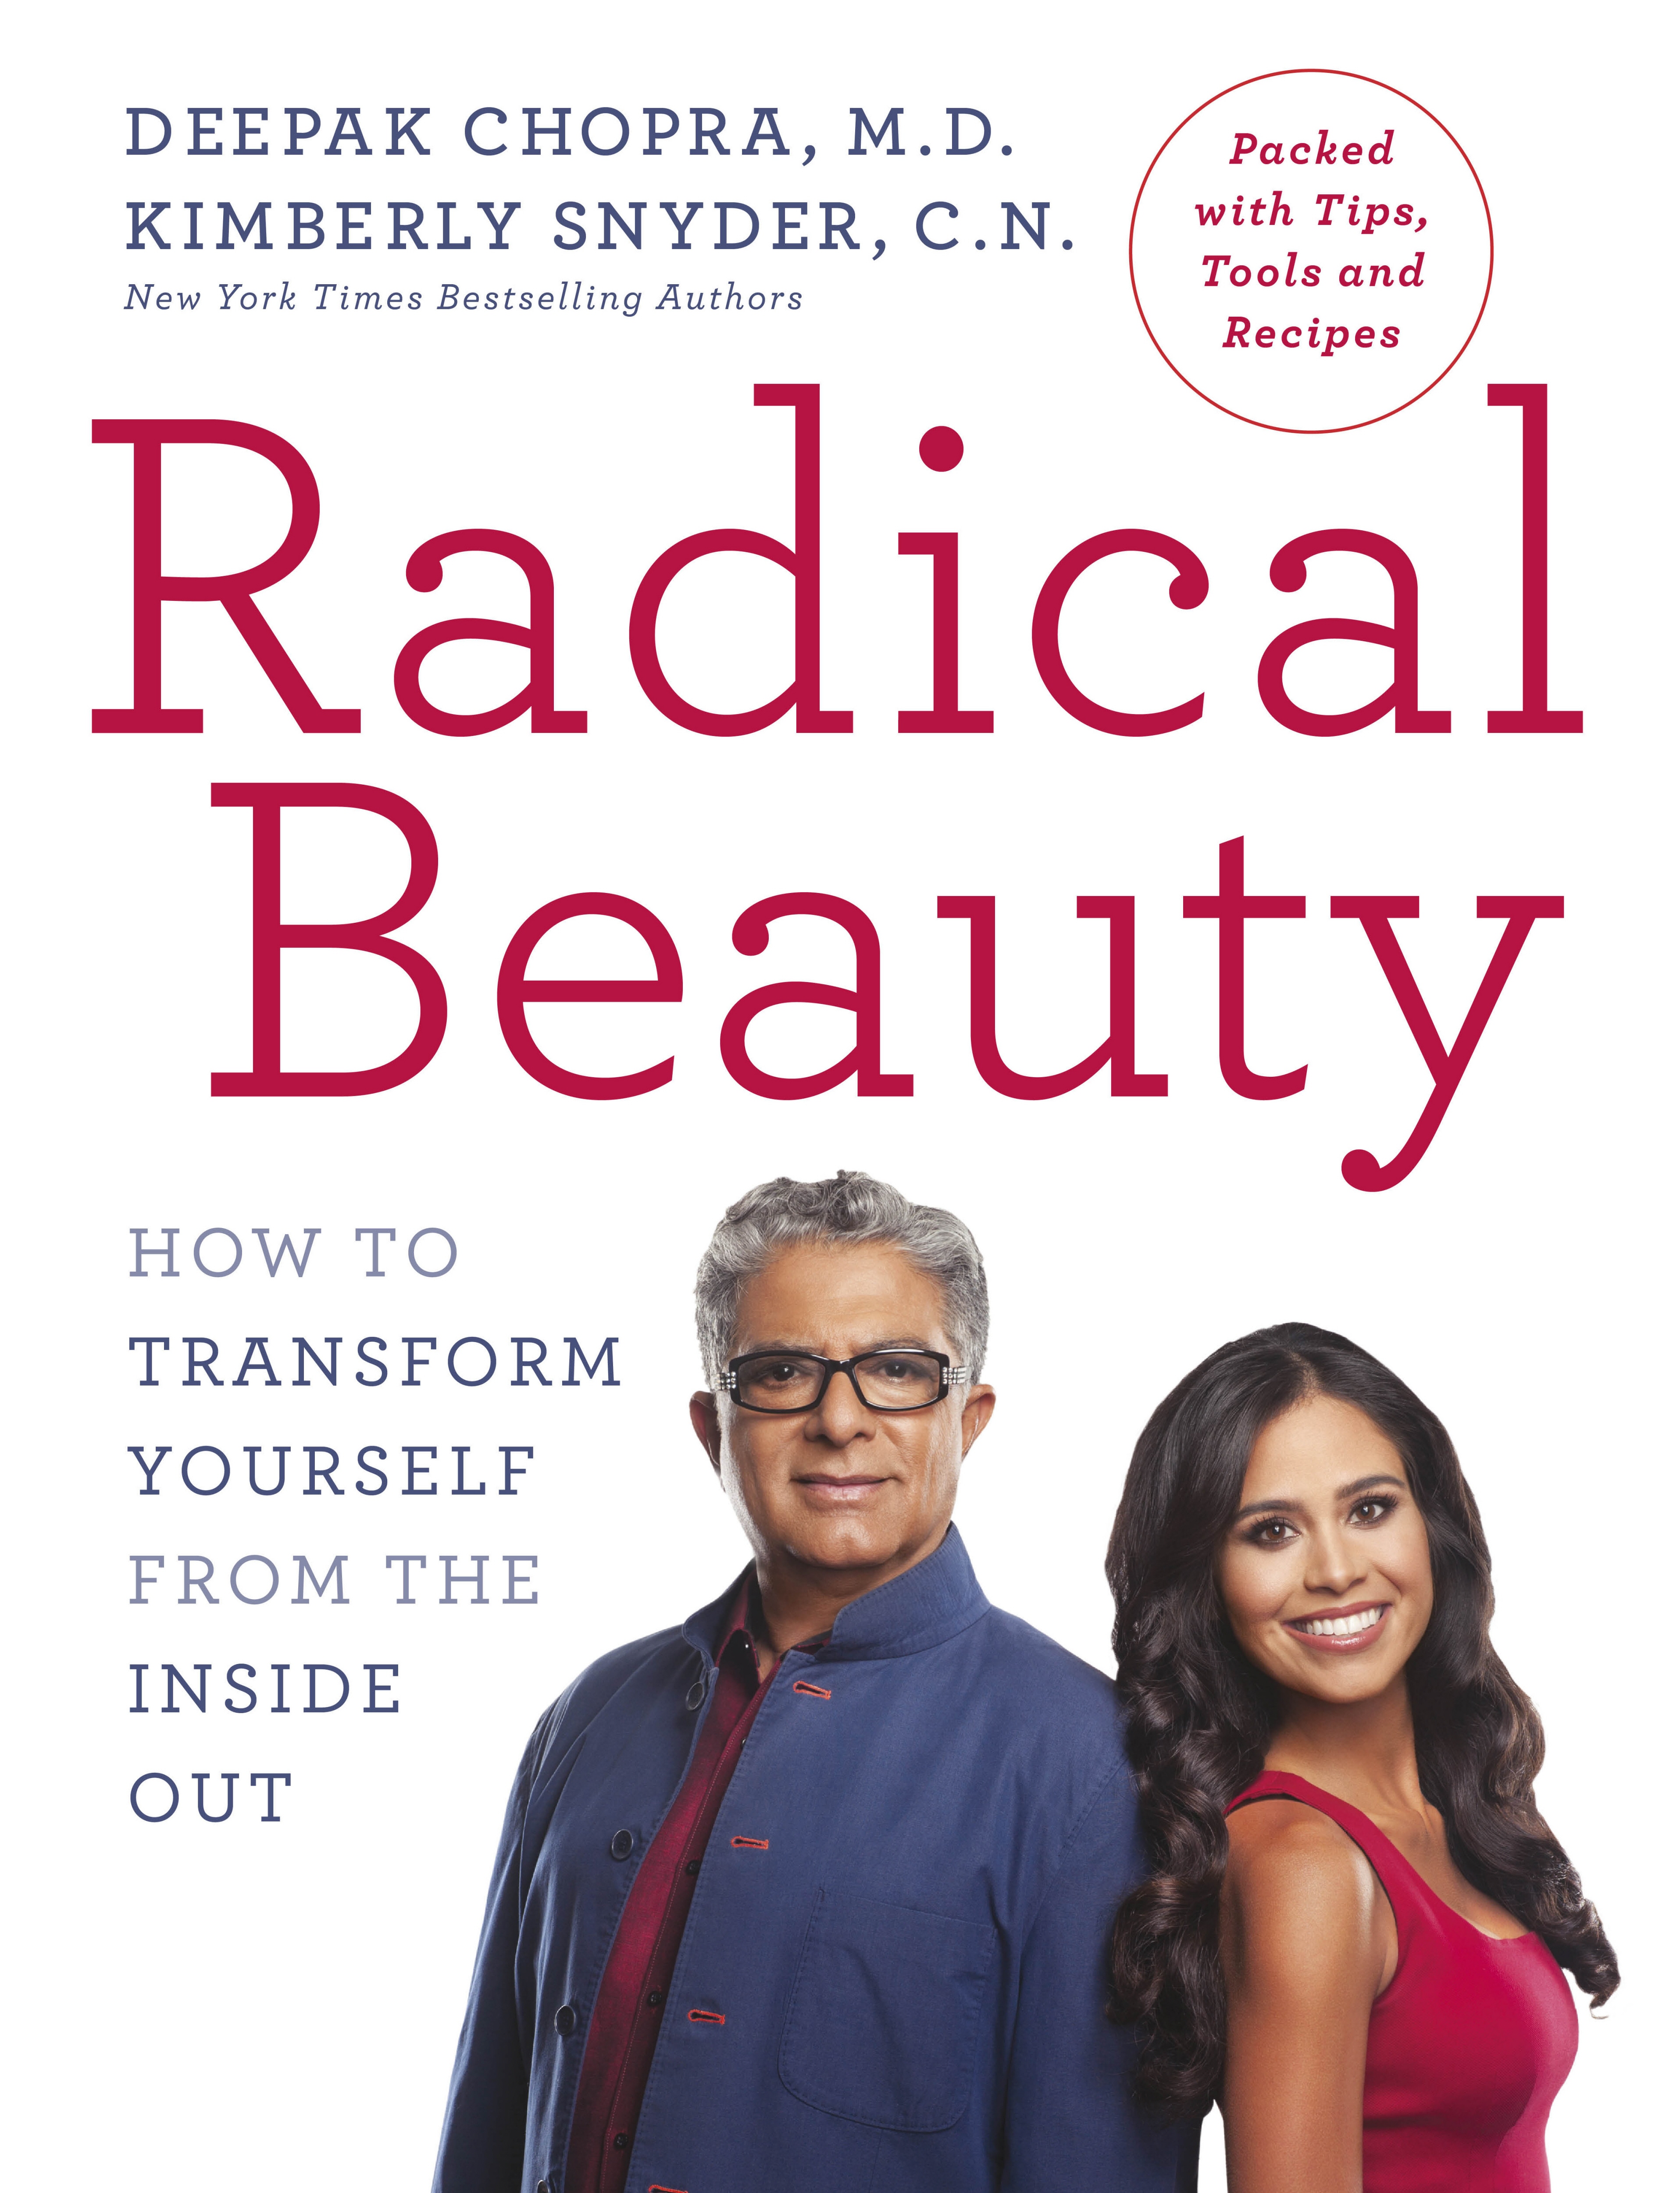 Book “Radical Beauty” by Deepak Chopra, Kimberly Snyder — February 6, 2020